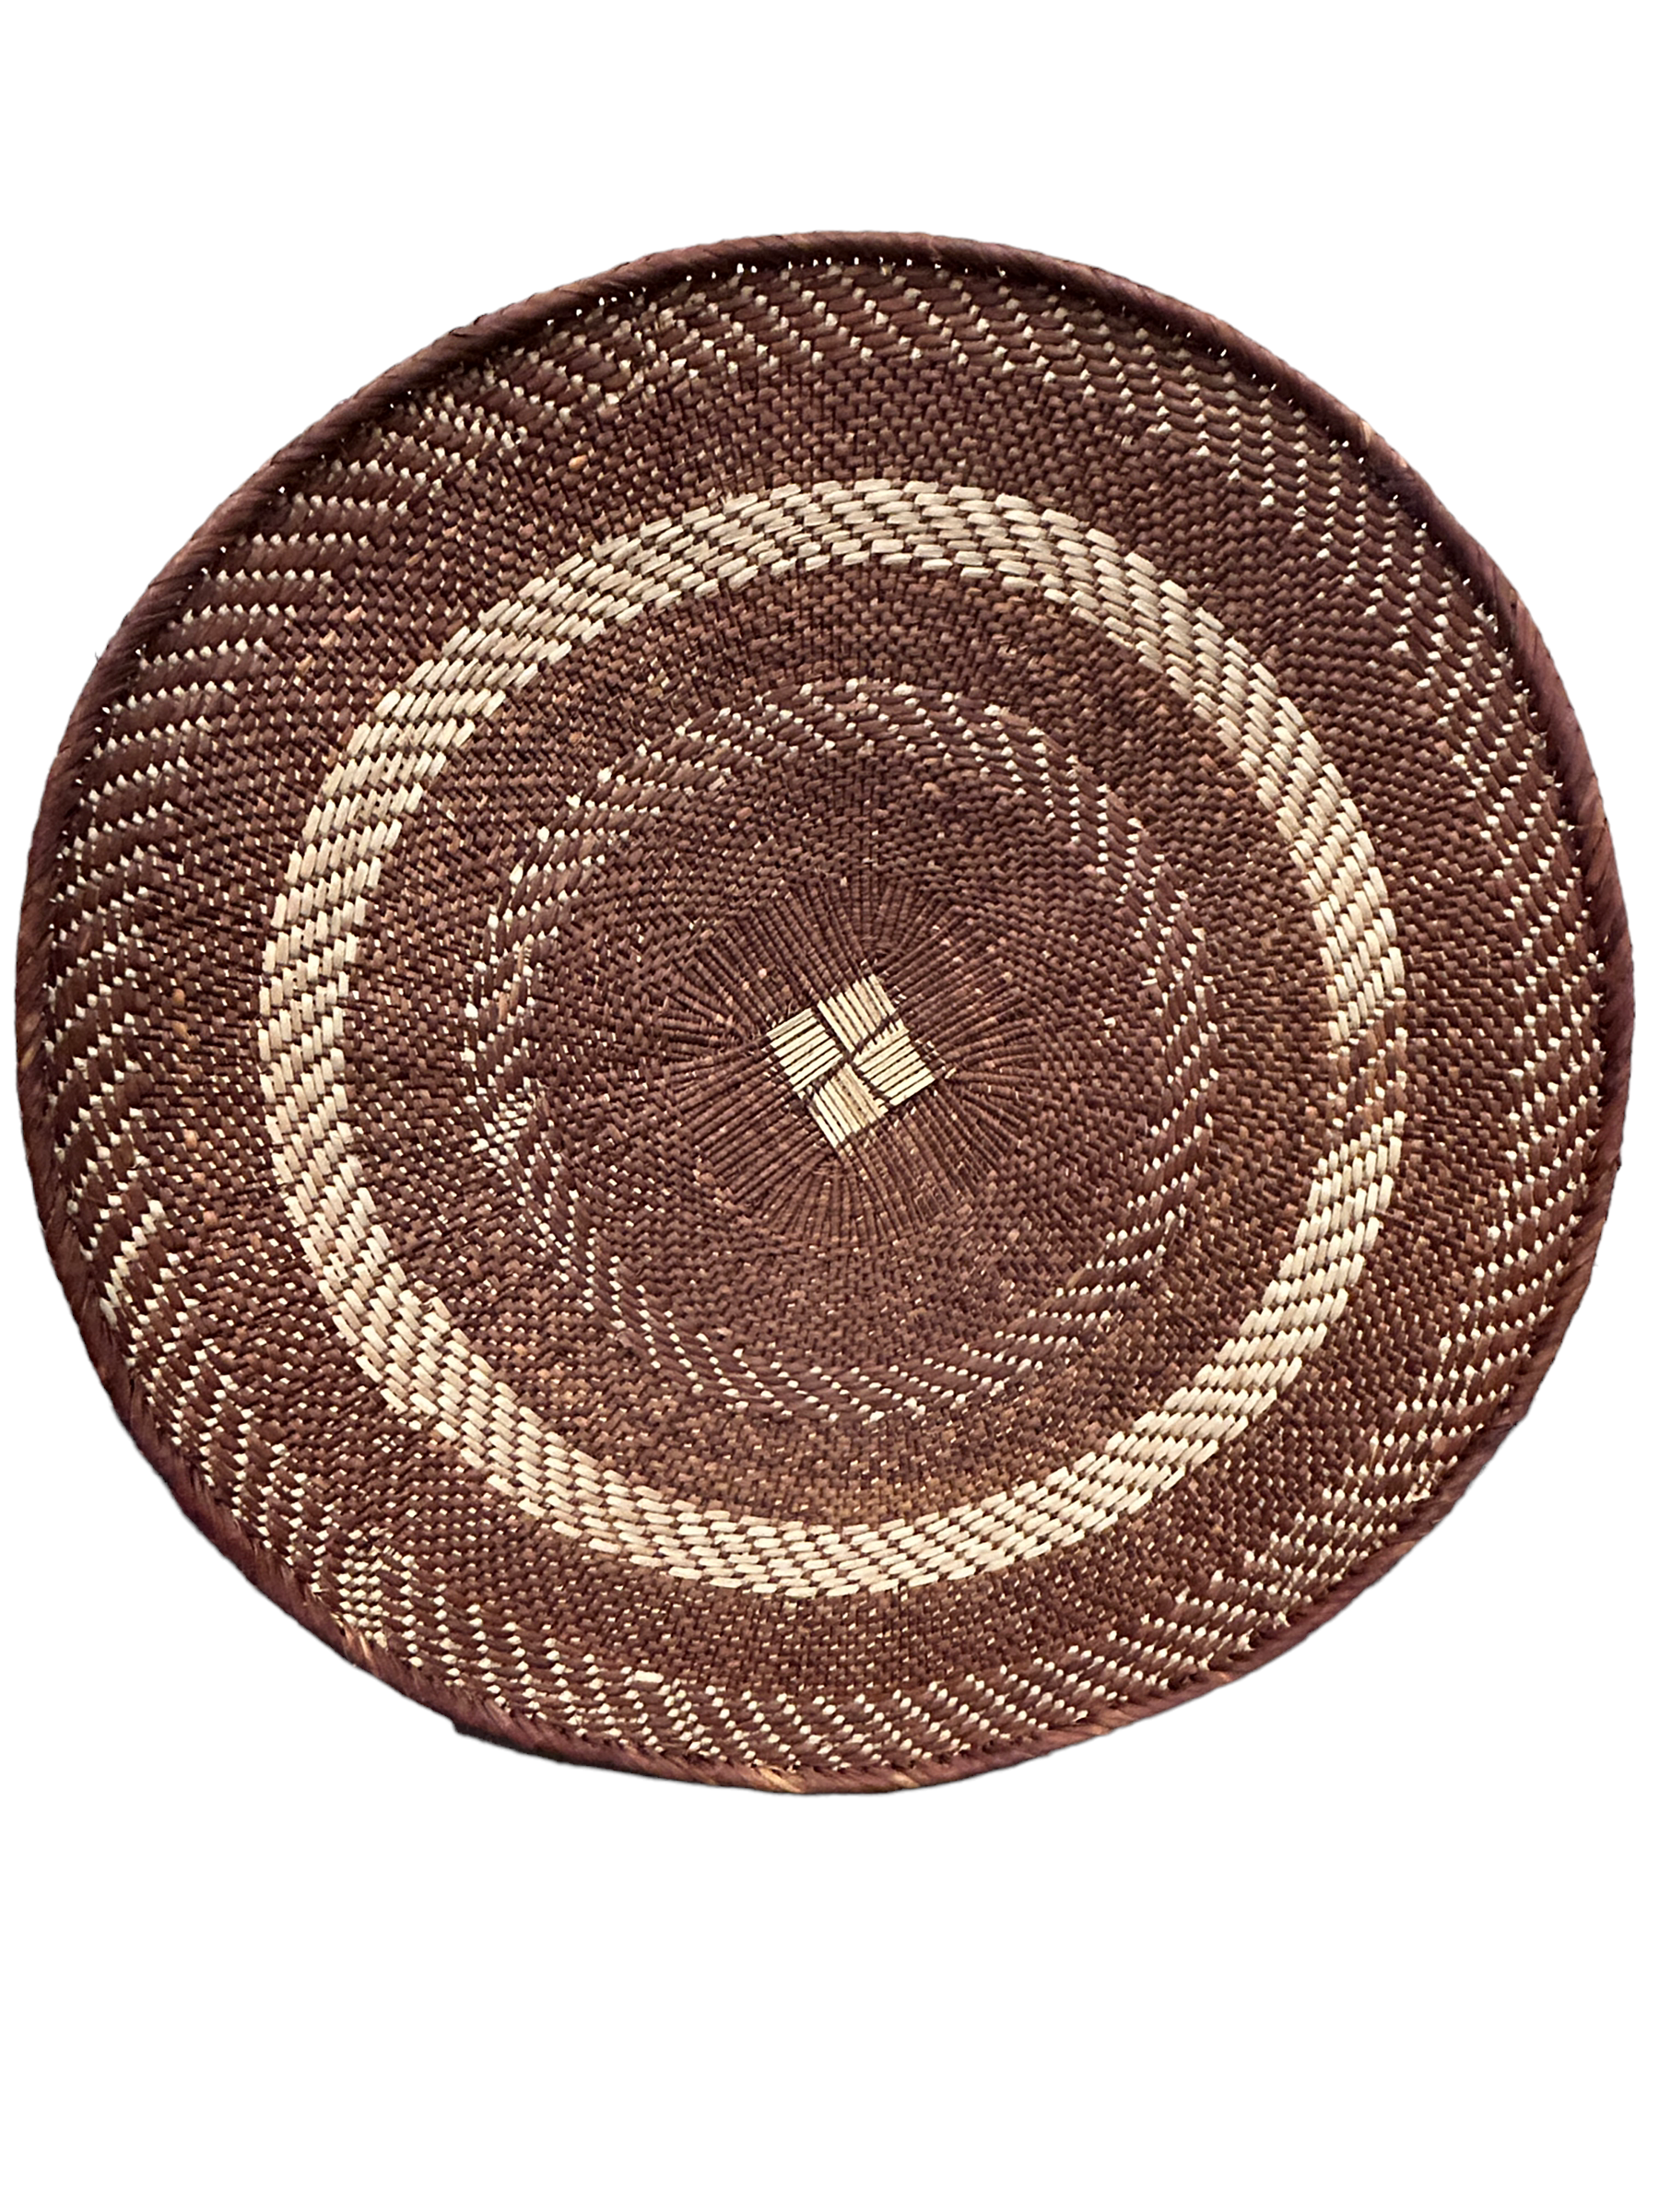 Tonga Basket Natural (60-13)